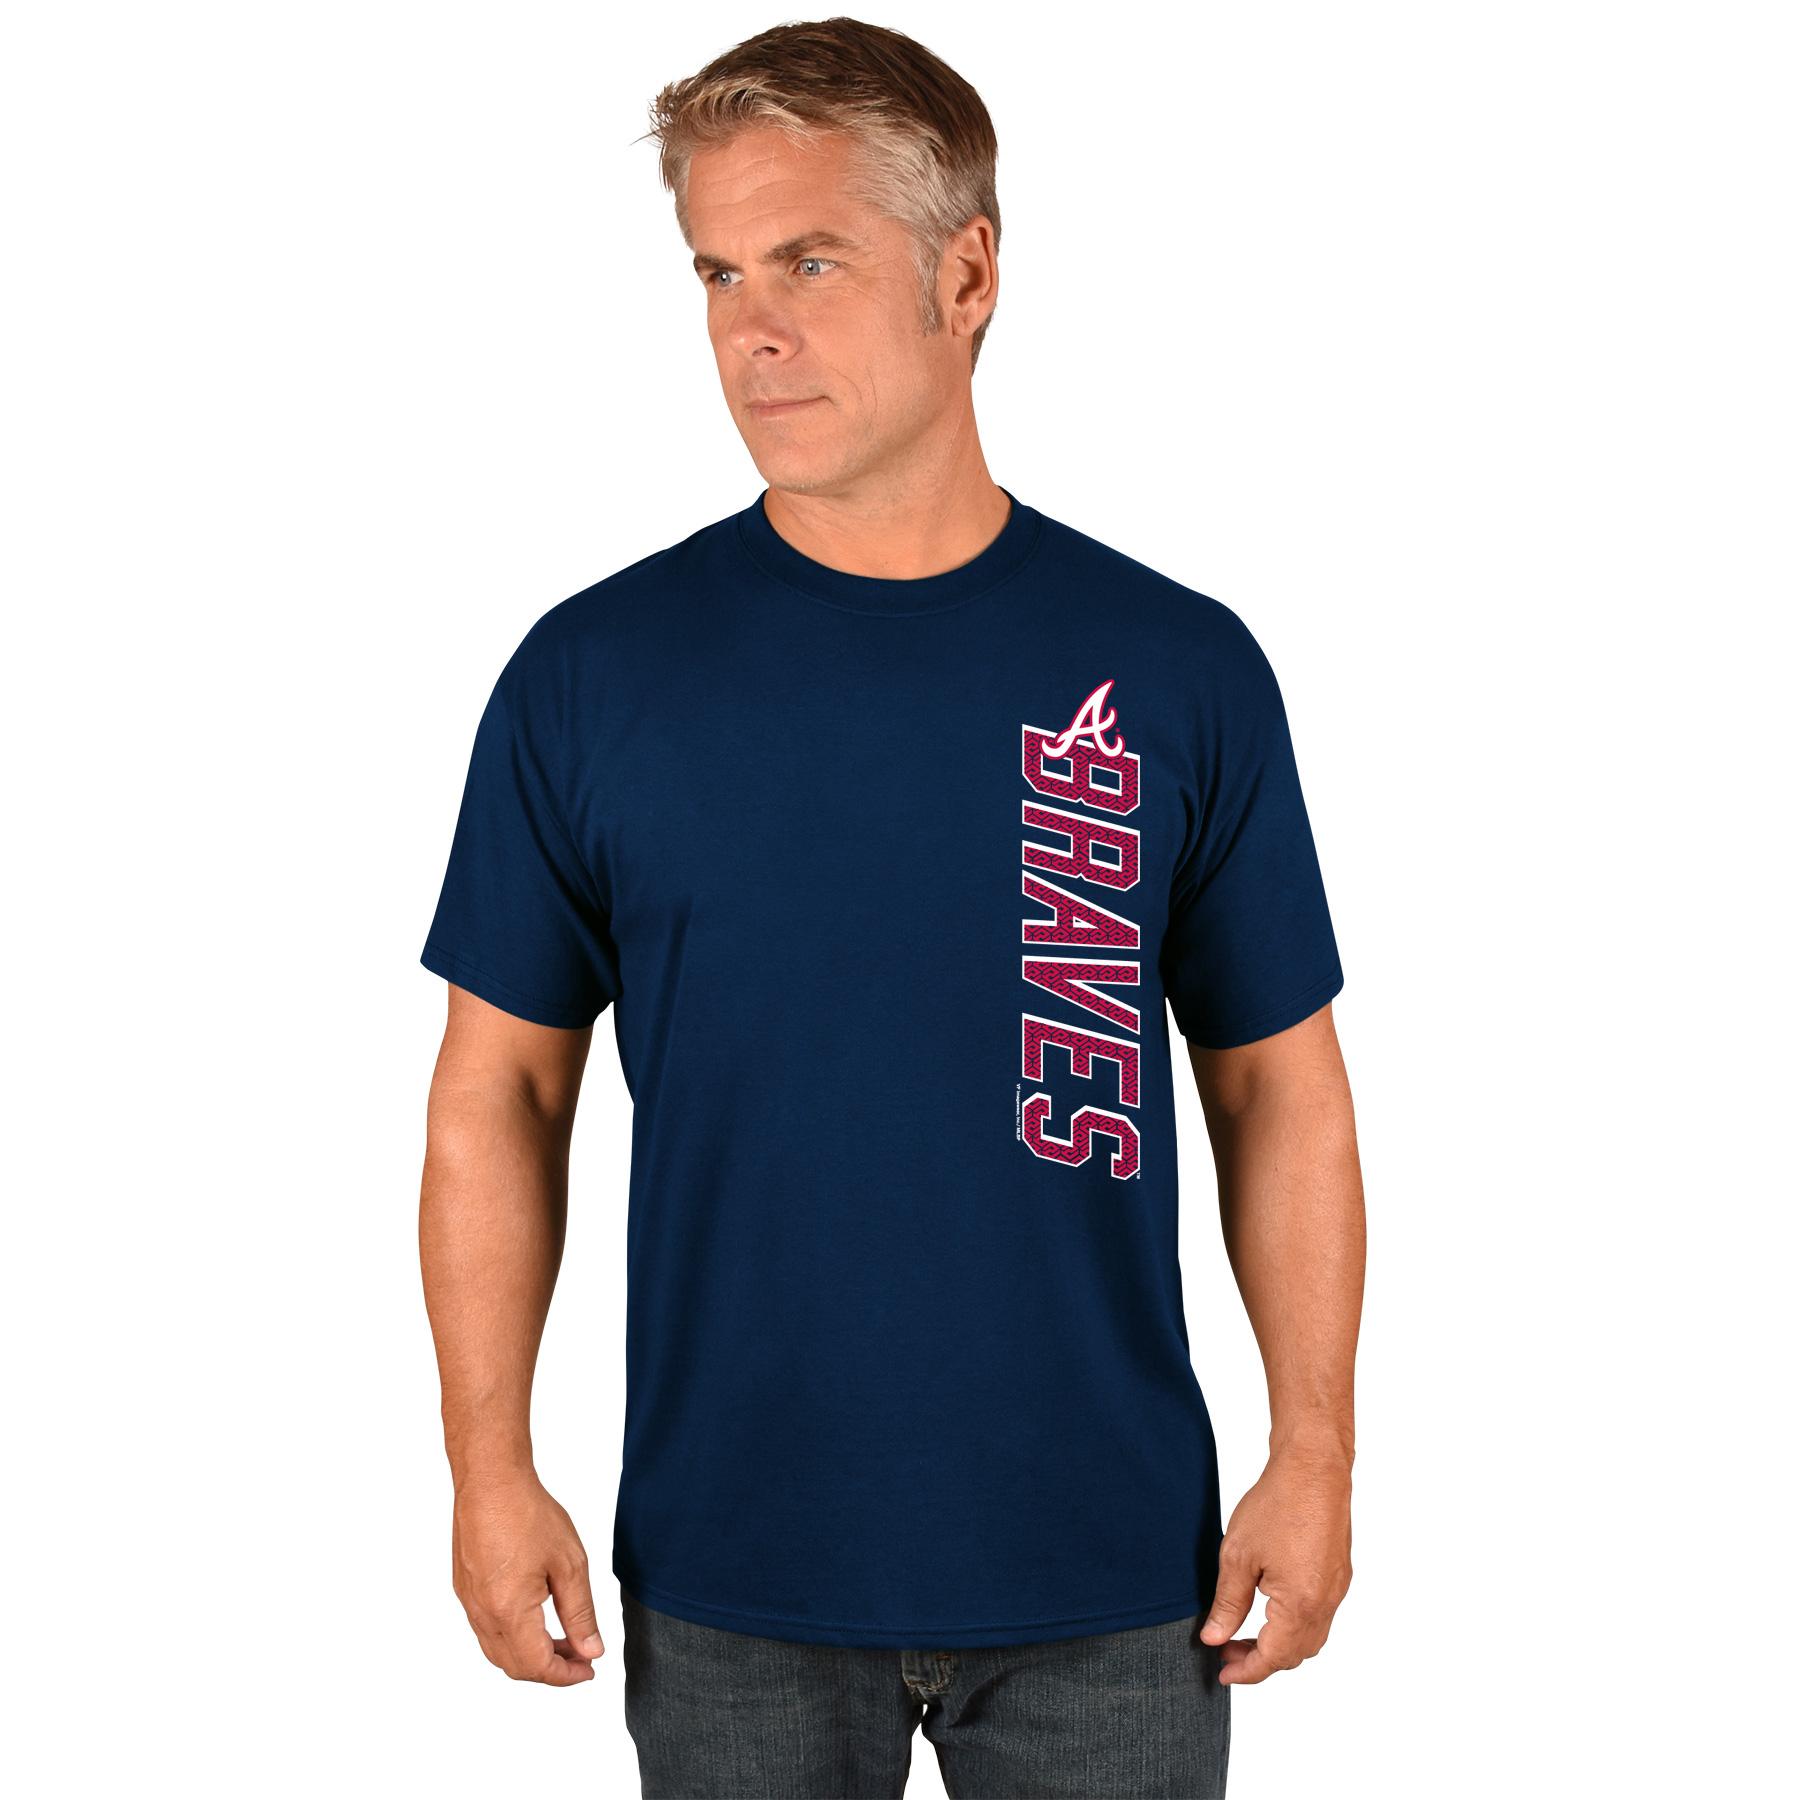 MLB Men's Big & Tall Graphic T-Shirt - Atlanta Braves